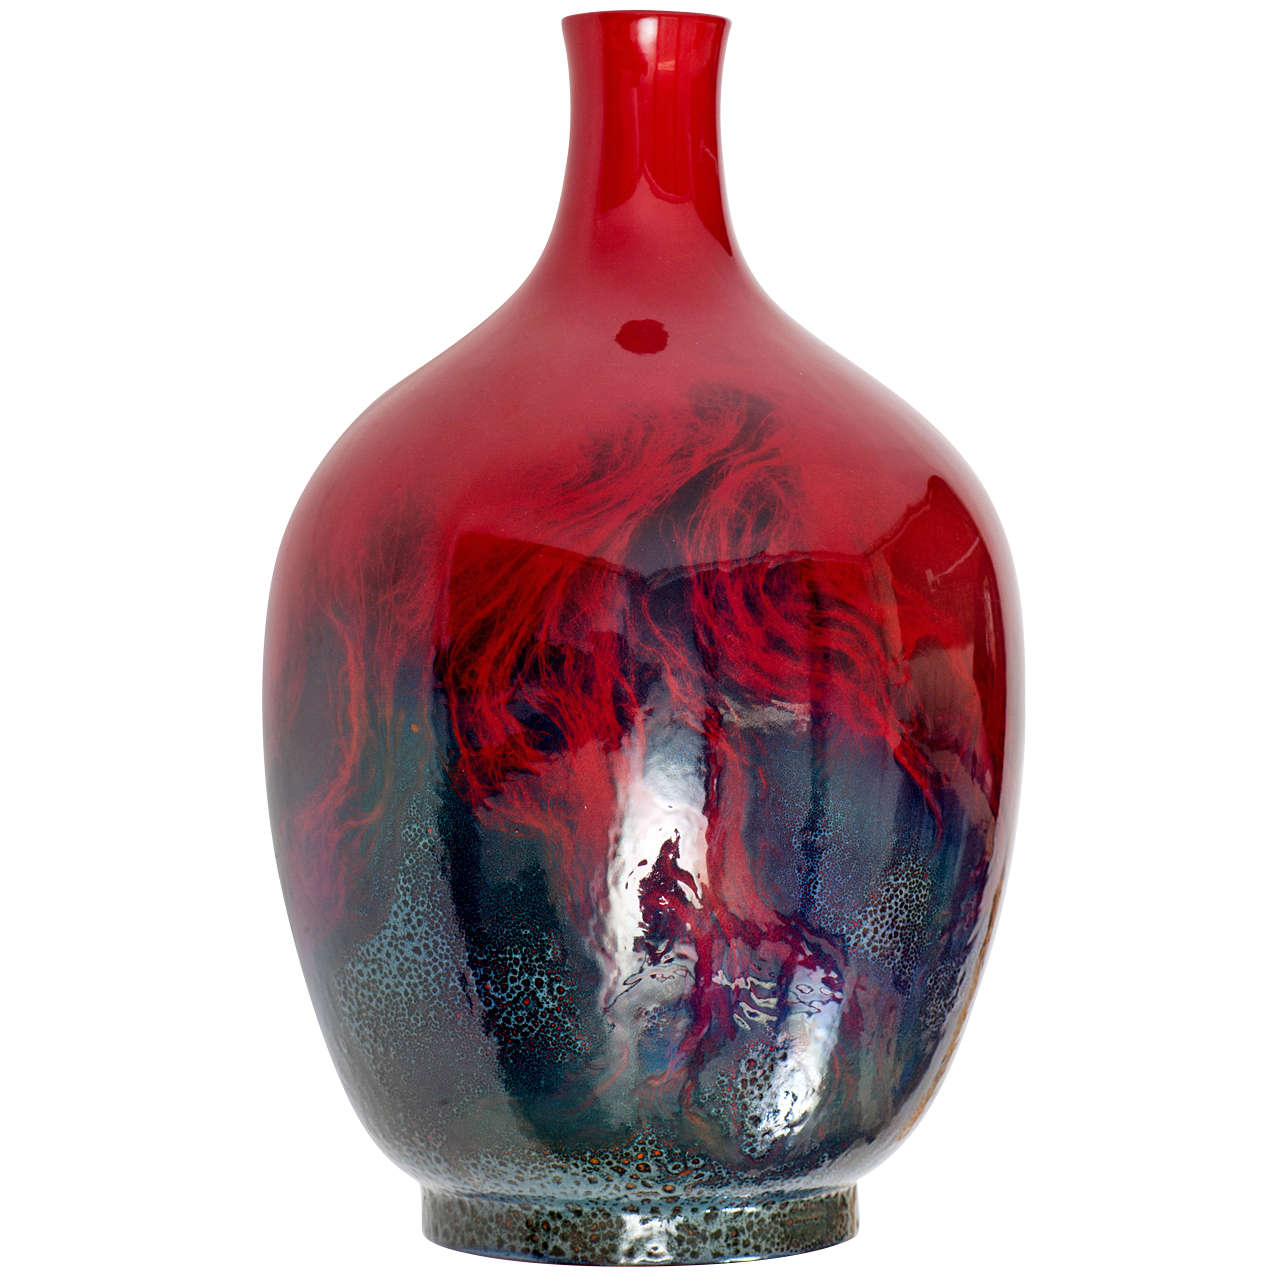 Huge Bulbous Royal Doulton Veined Flambe Bottle Vase For Sale